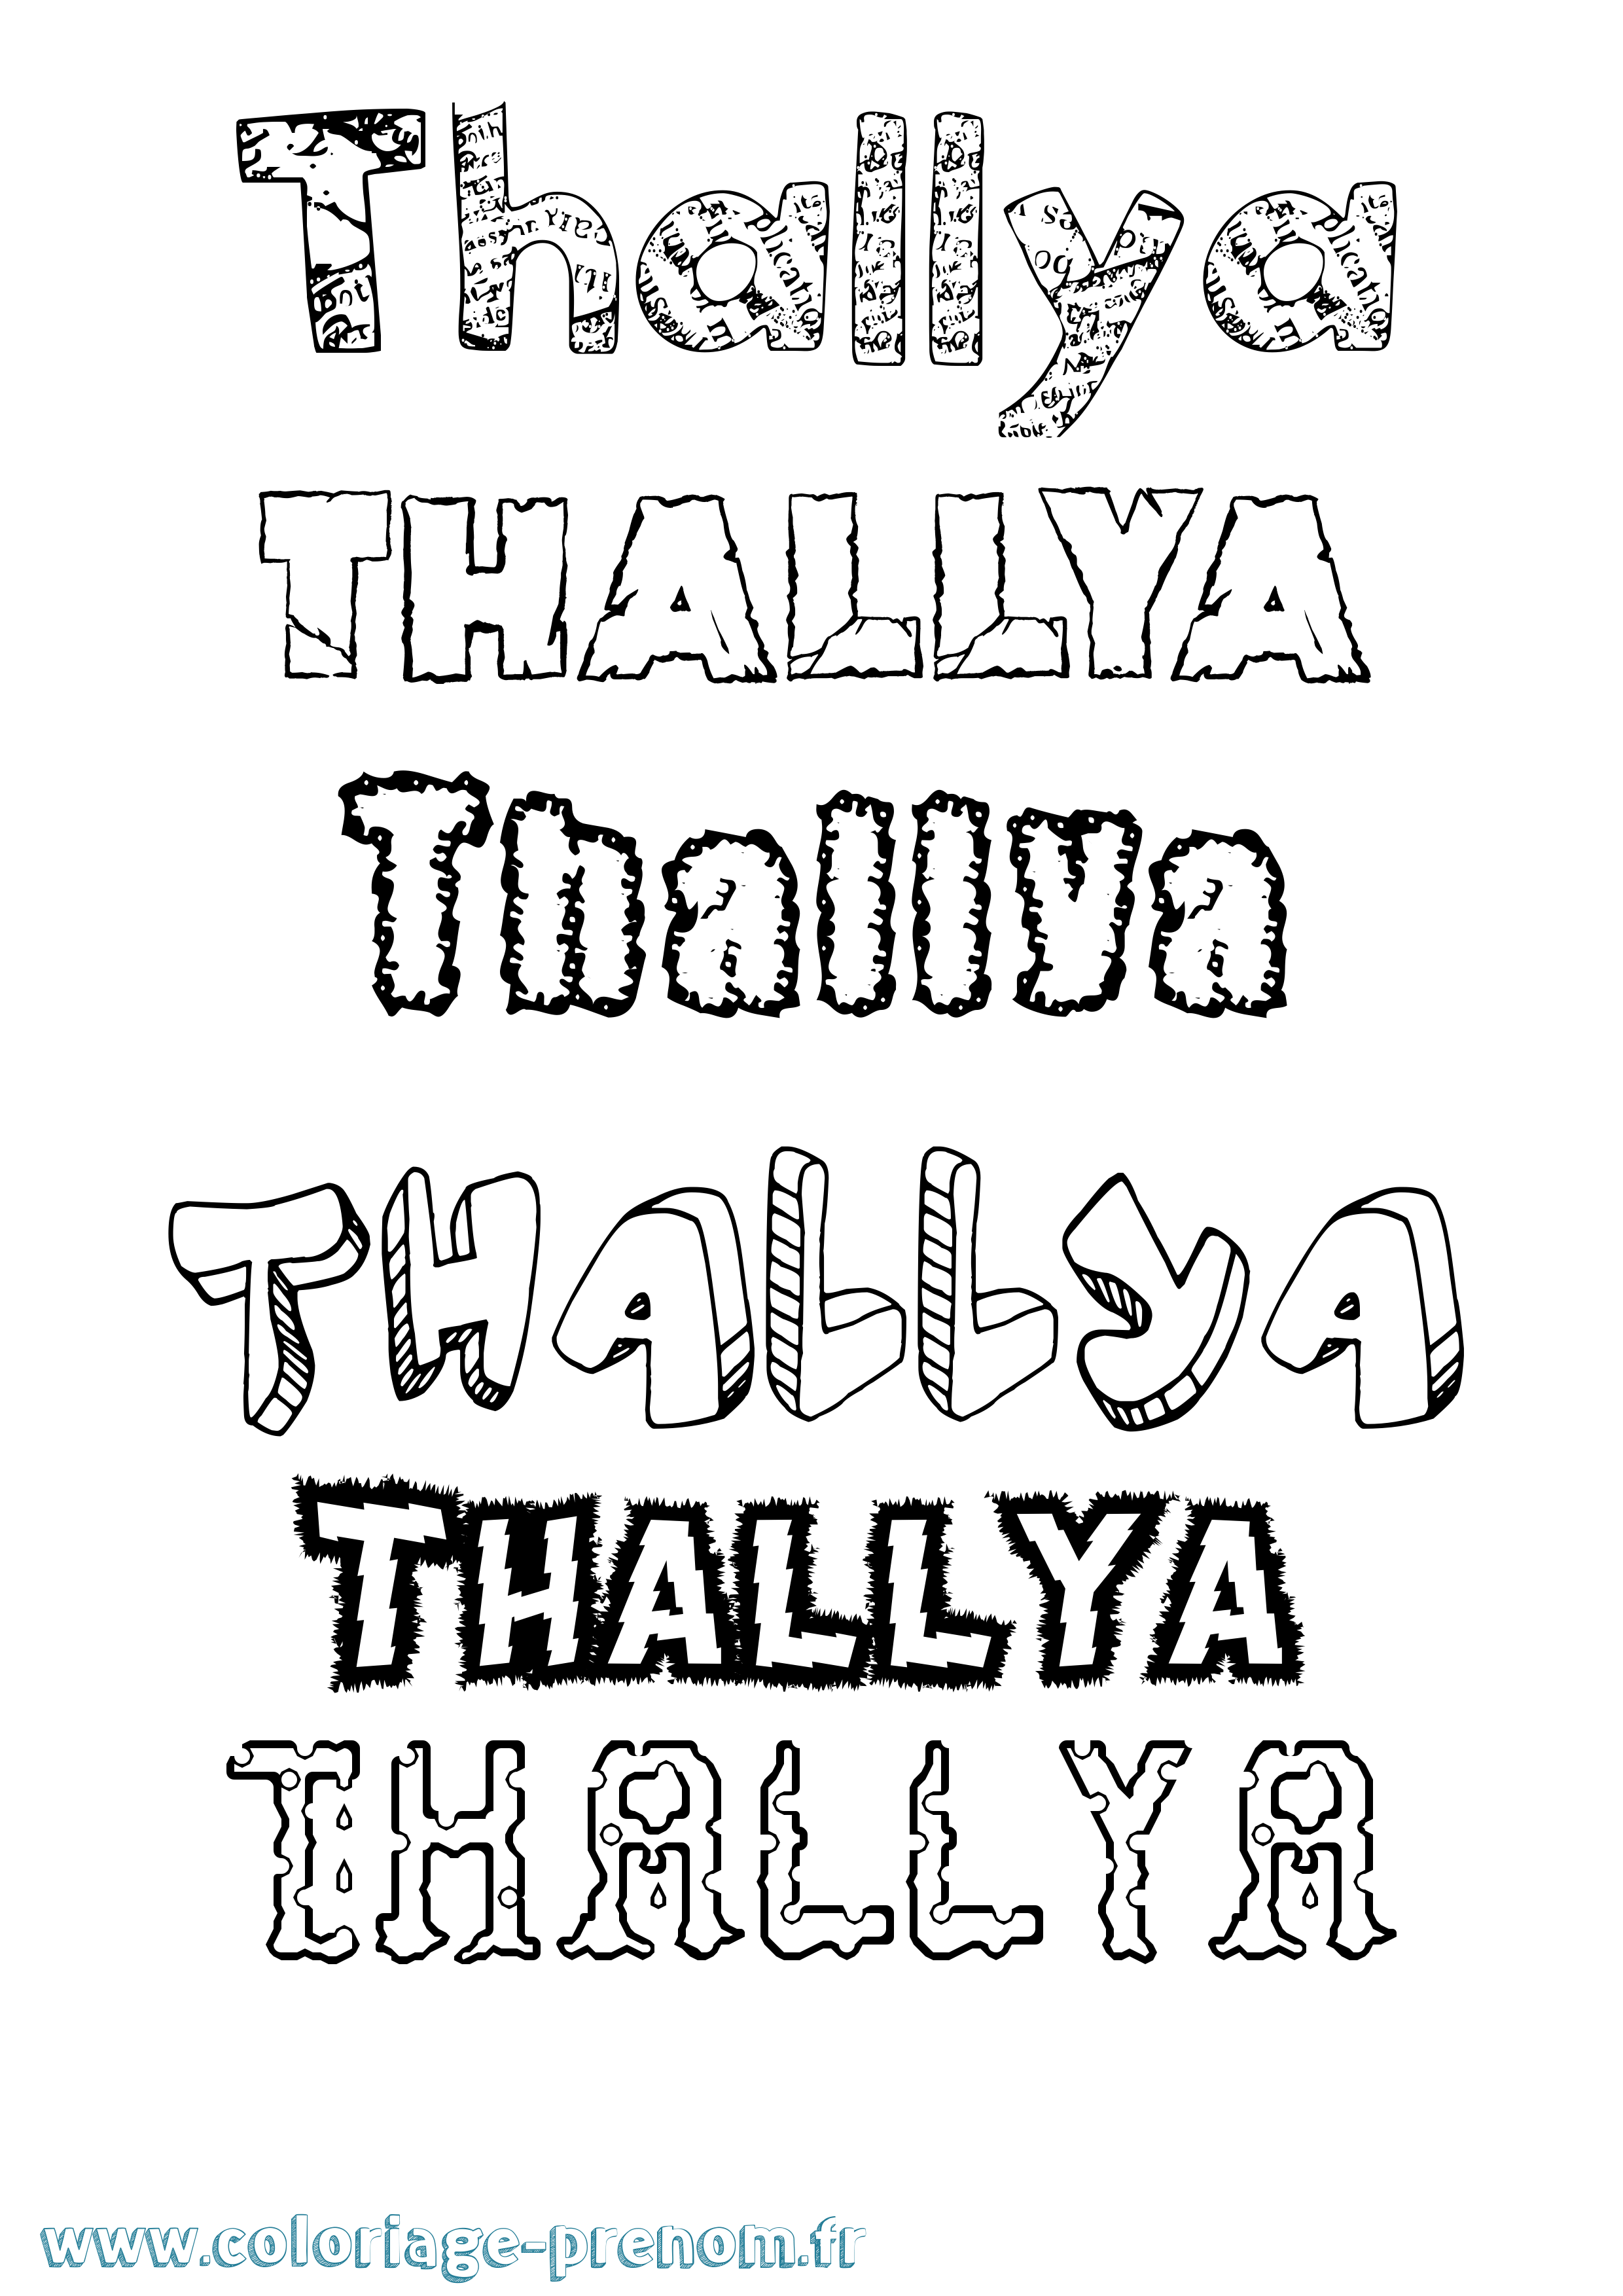 Coloriage prénom Thallya Destructuré